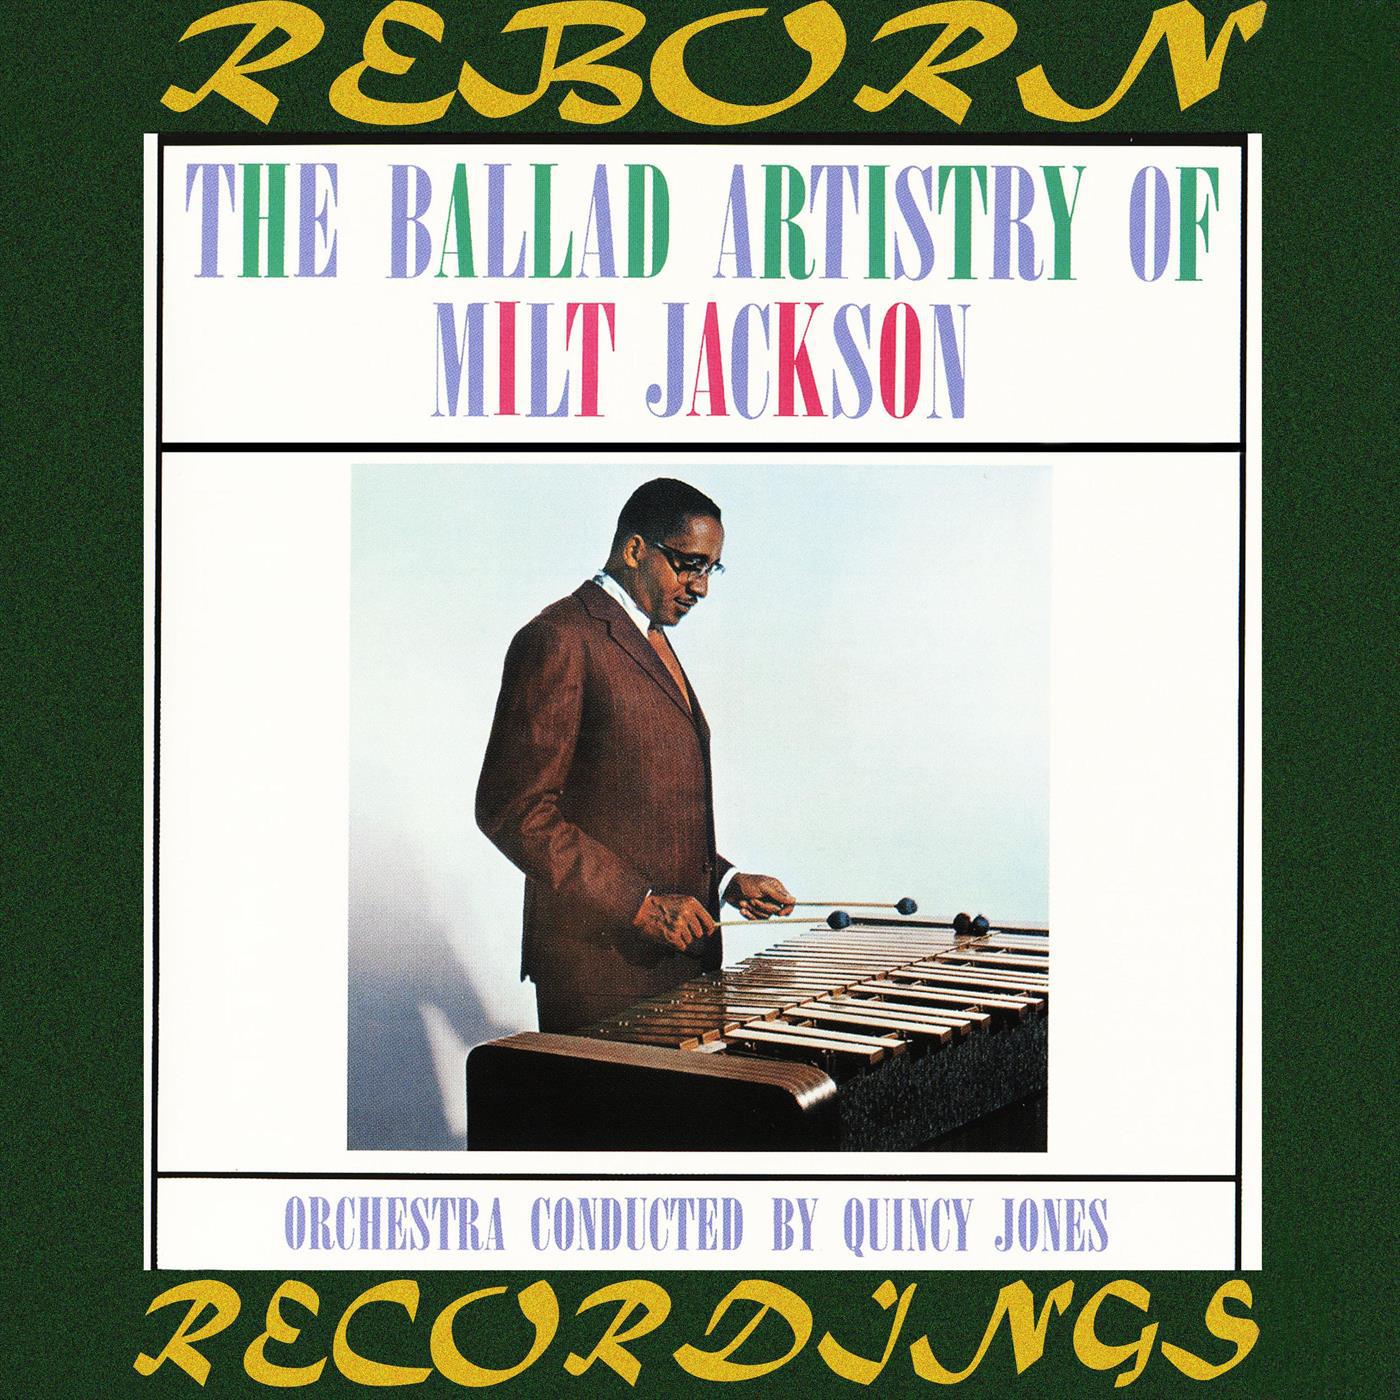 The Ballad Artistry Of Milt Jackson (Japanese, HD Remastered)